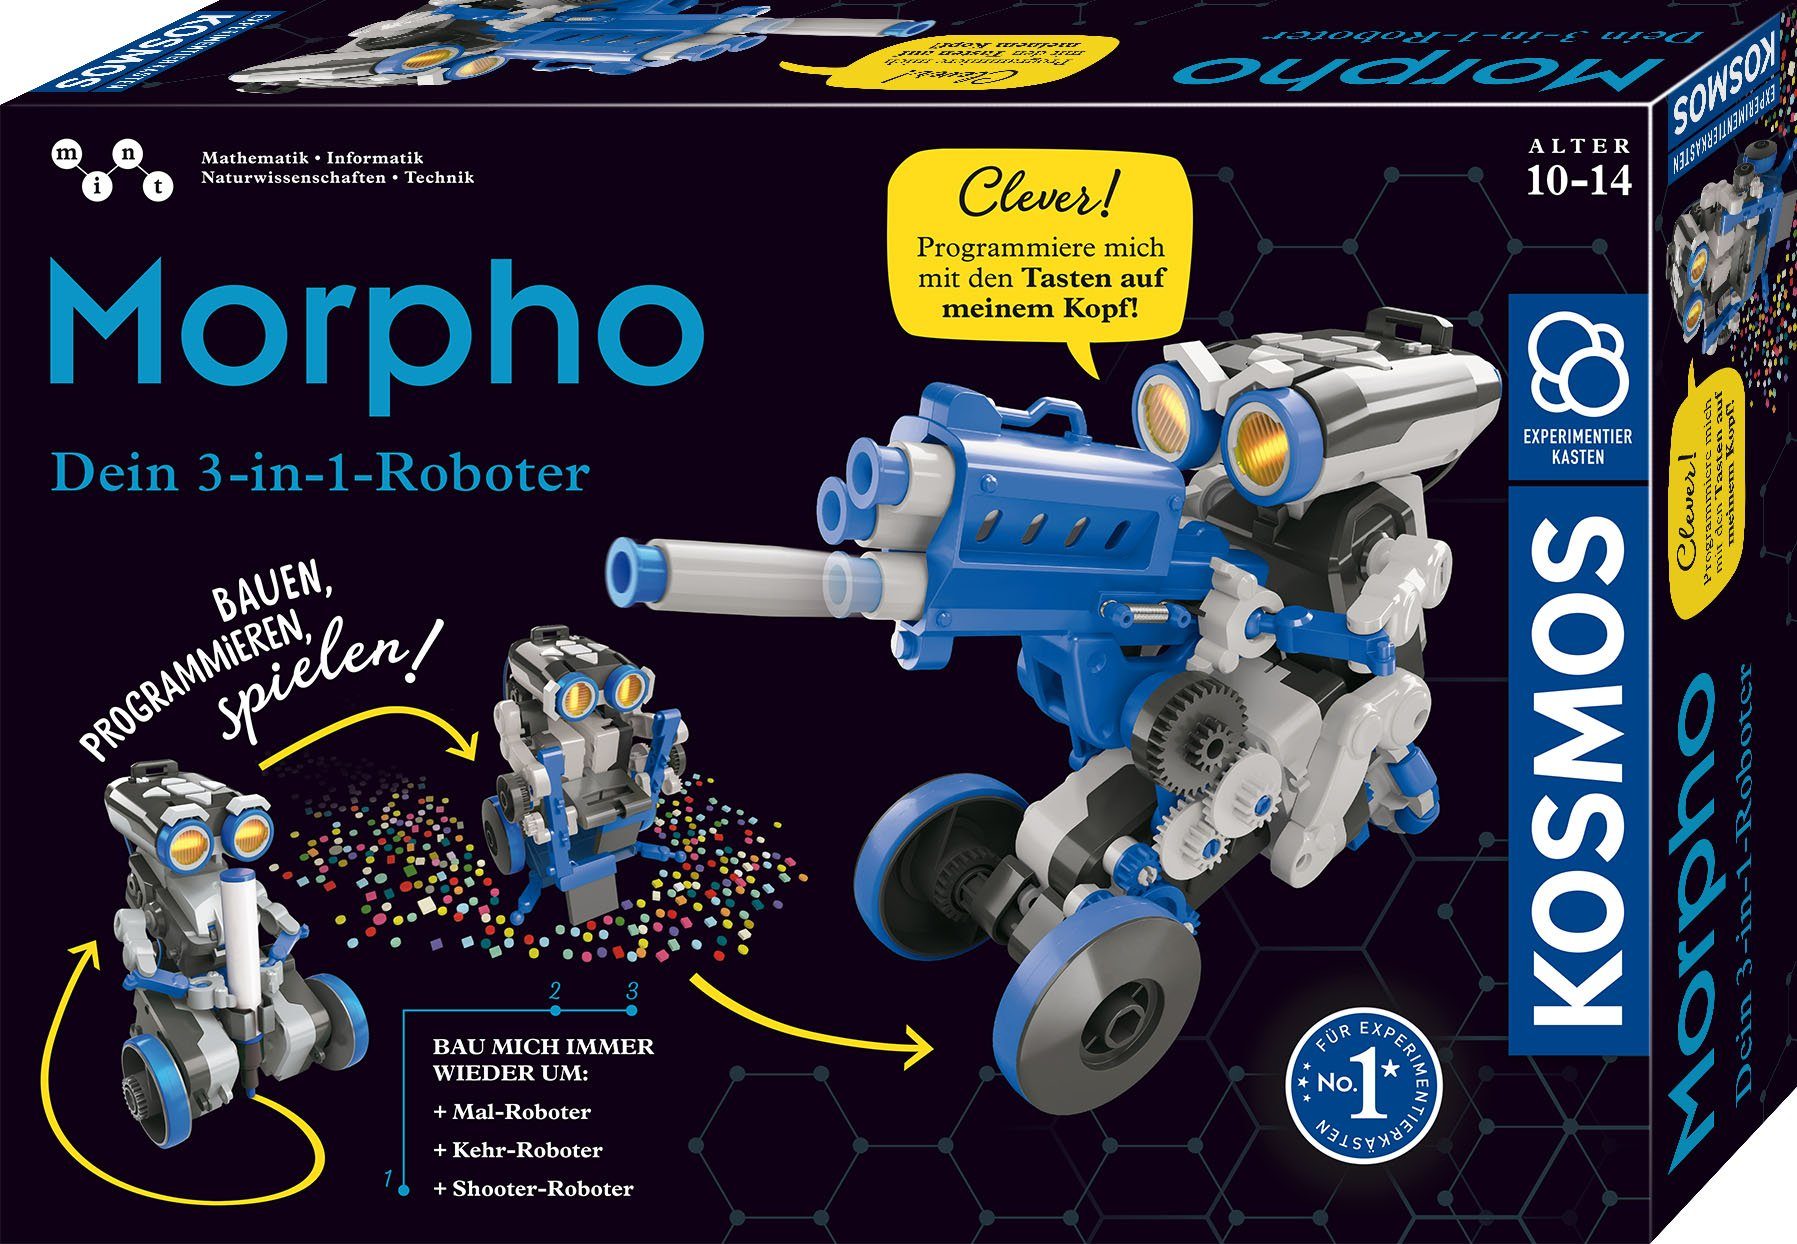 Morpho 3-in-1 - Kosmos Experimentierkasten Dein Roboter